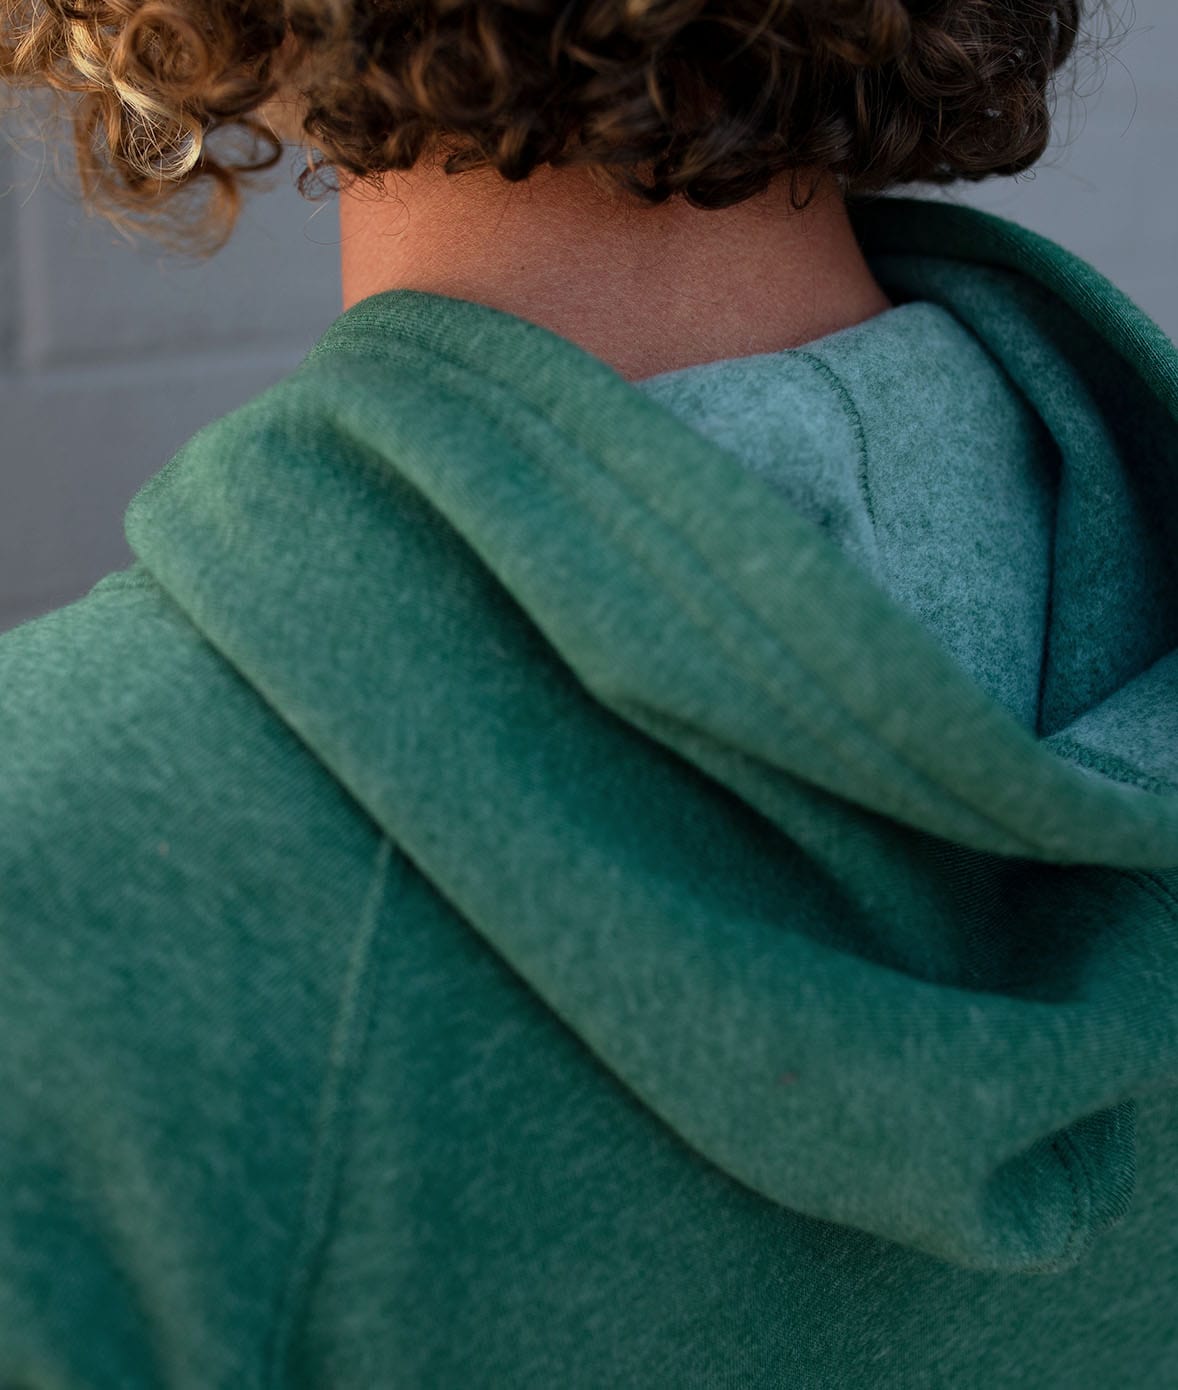 Men's Ridiculously Soft Raglan Hooded Sweatshirt Worn by Model